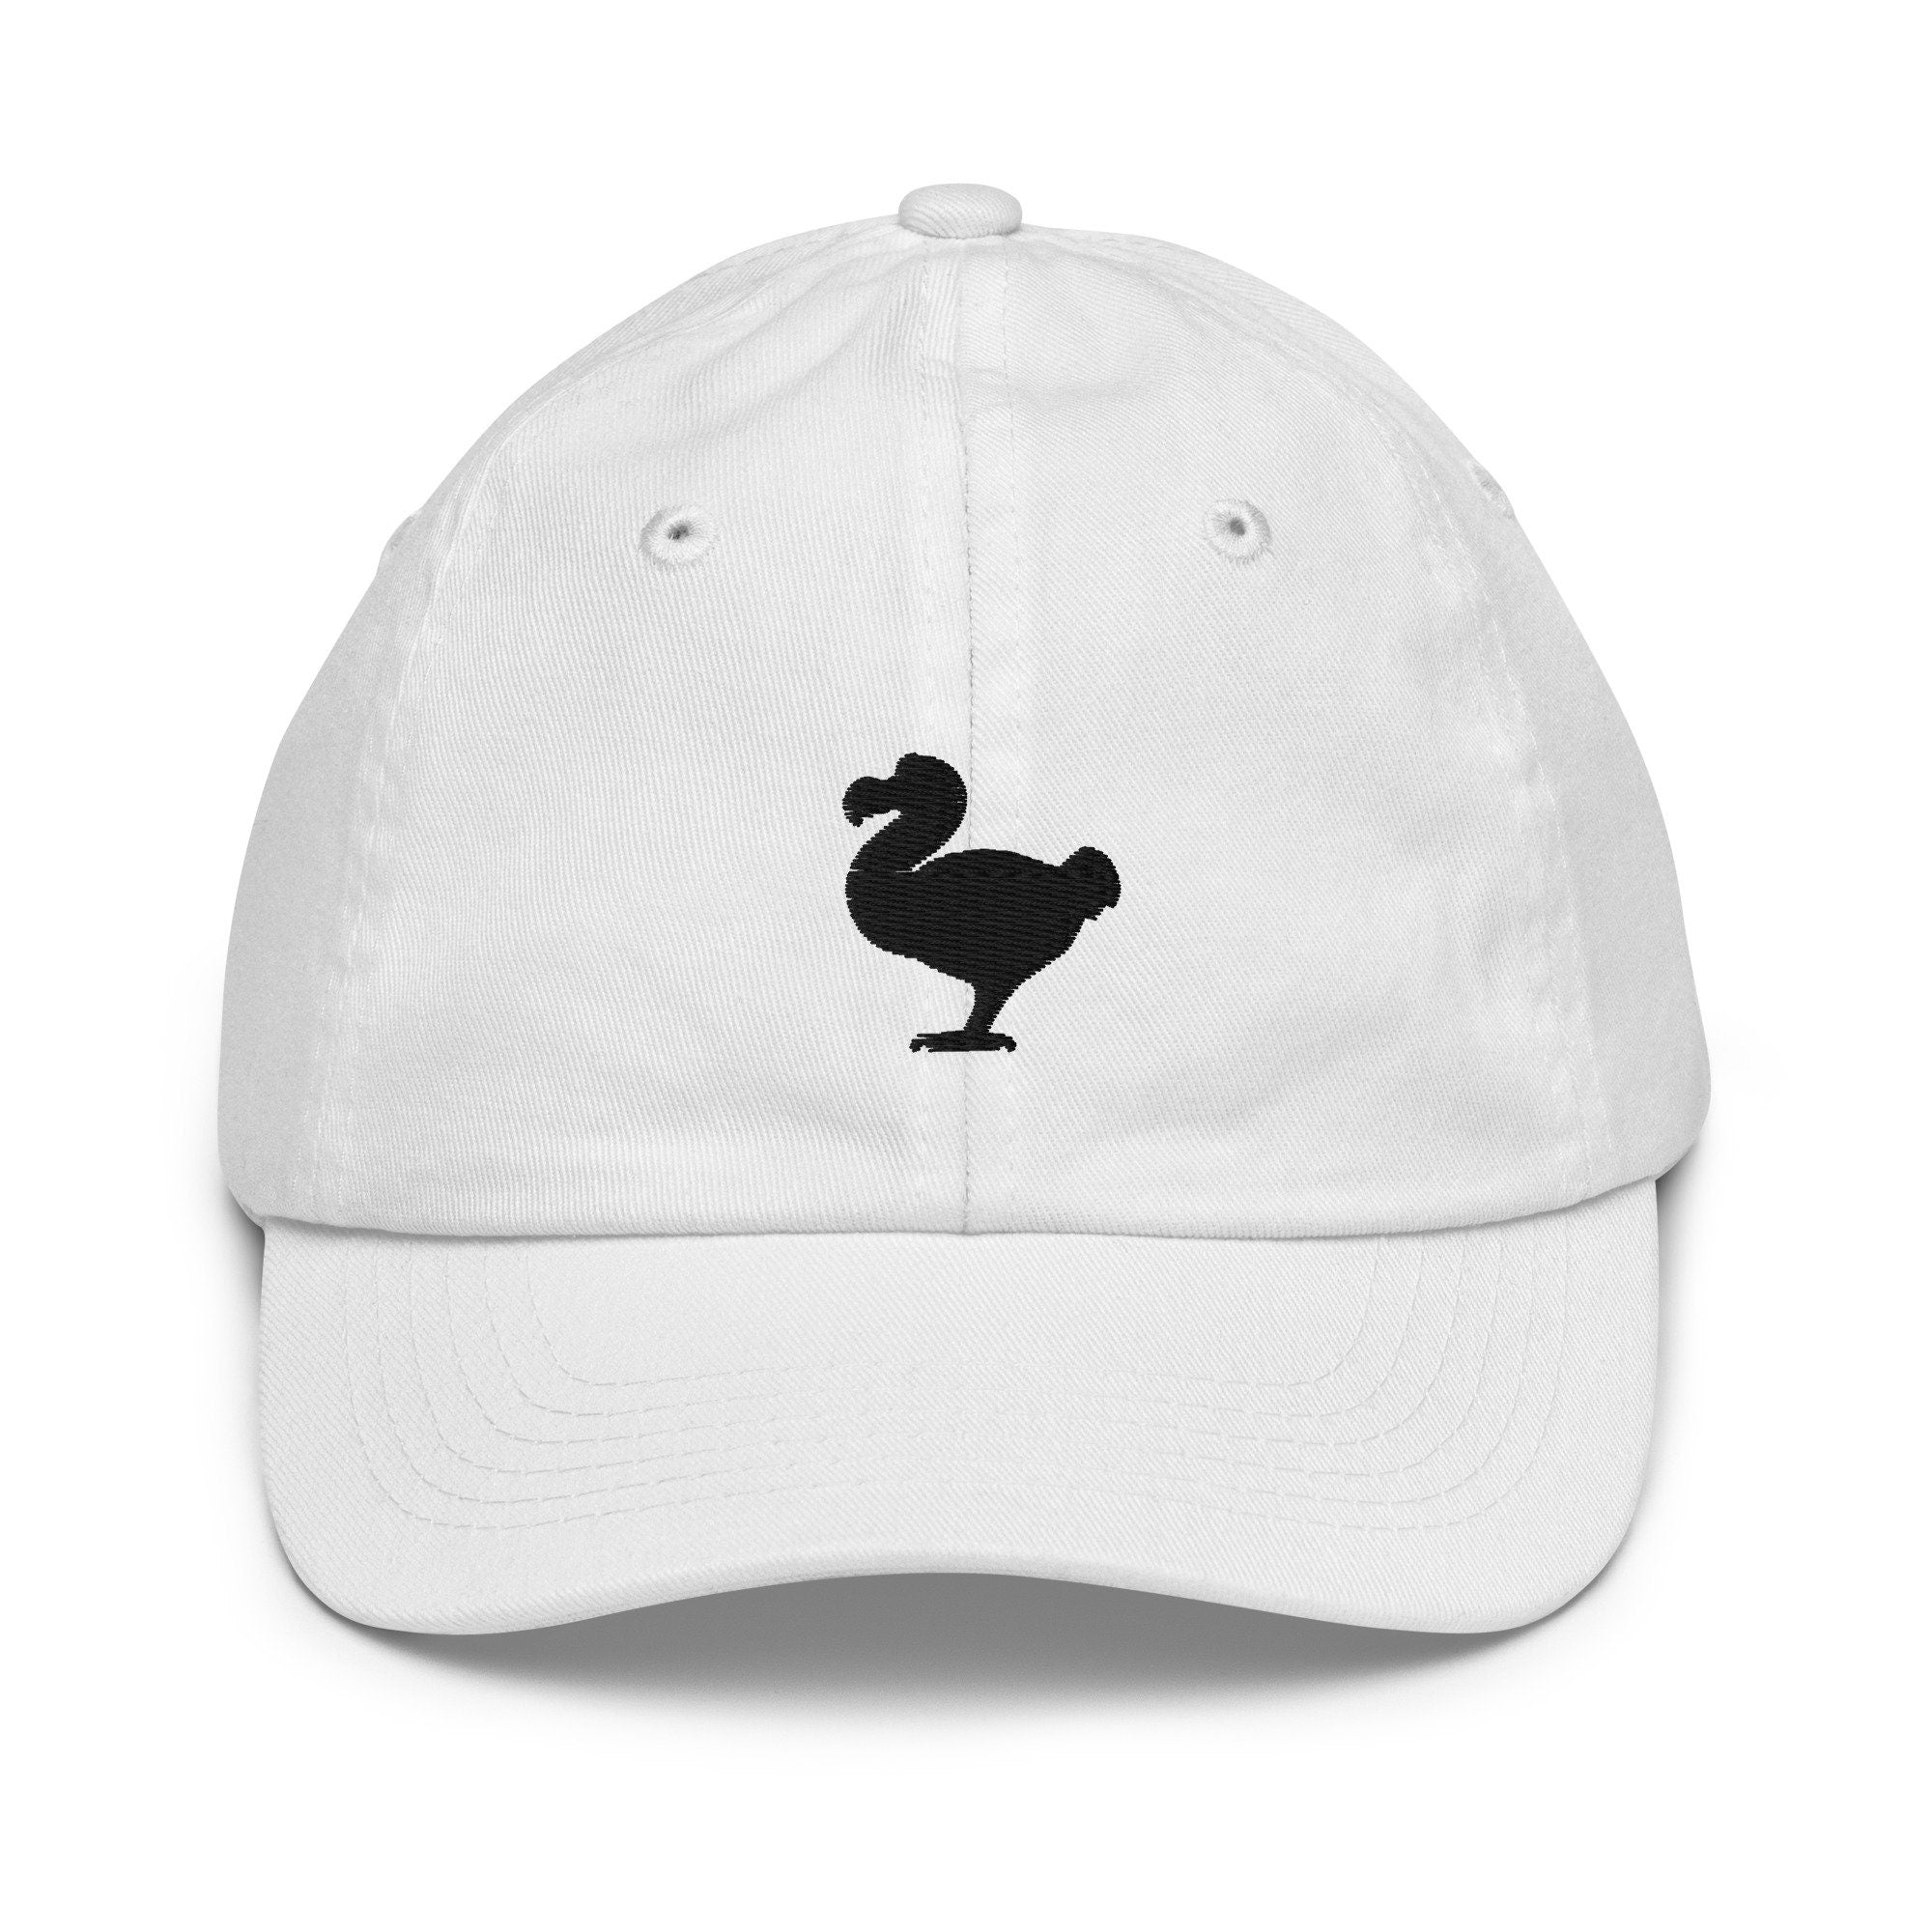 Dodo Bird Youth Baseball Cap, Handmade Kids Hat, Embroidered Childrens Hat Gift - Multiple Colors